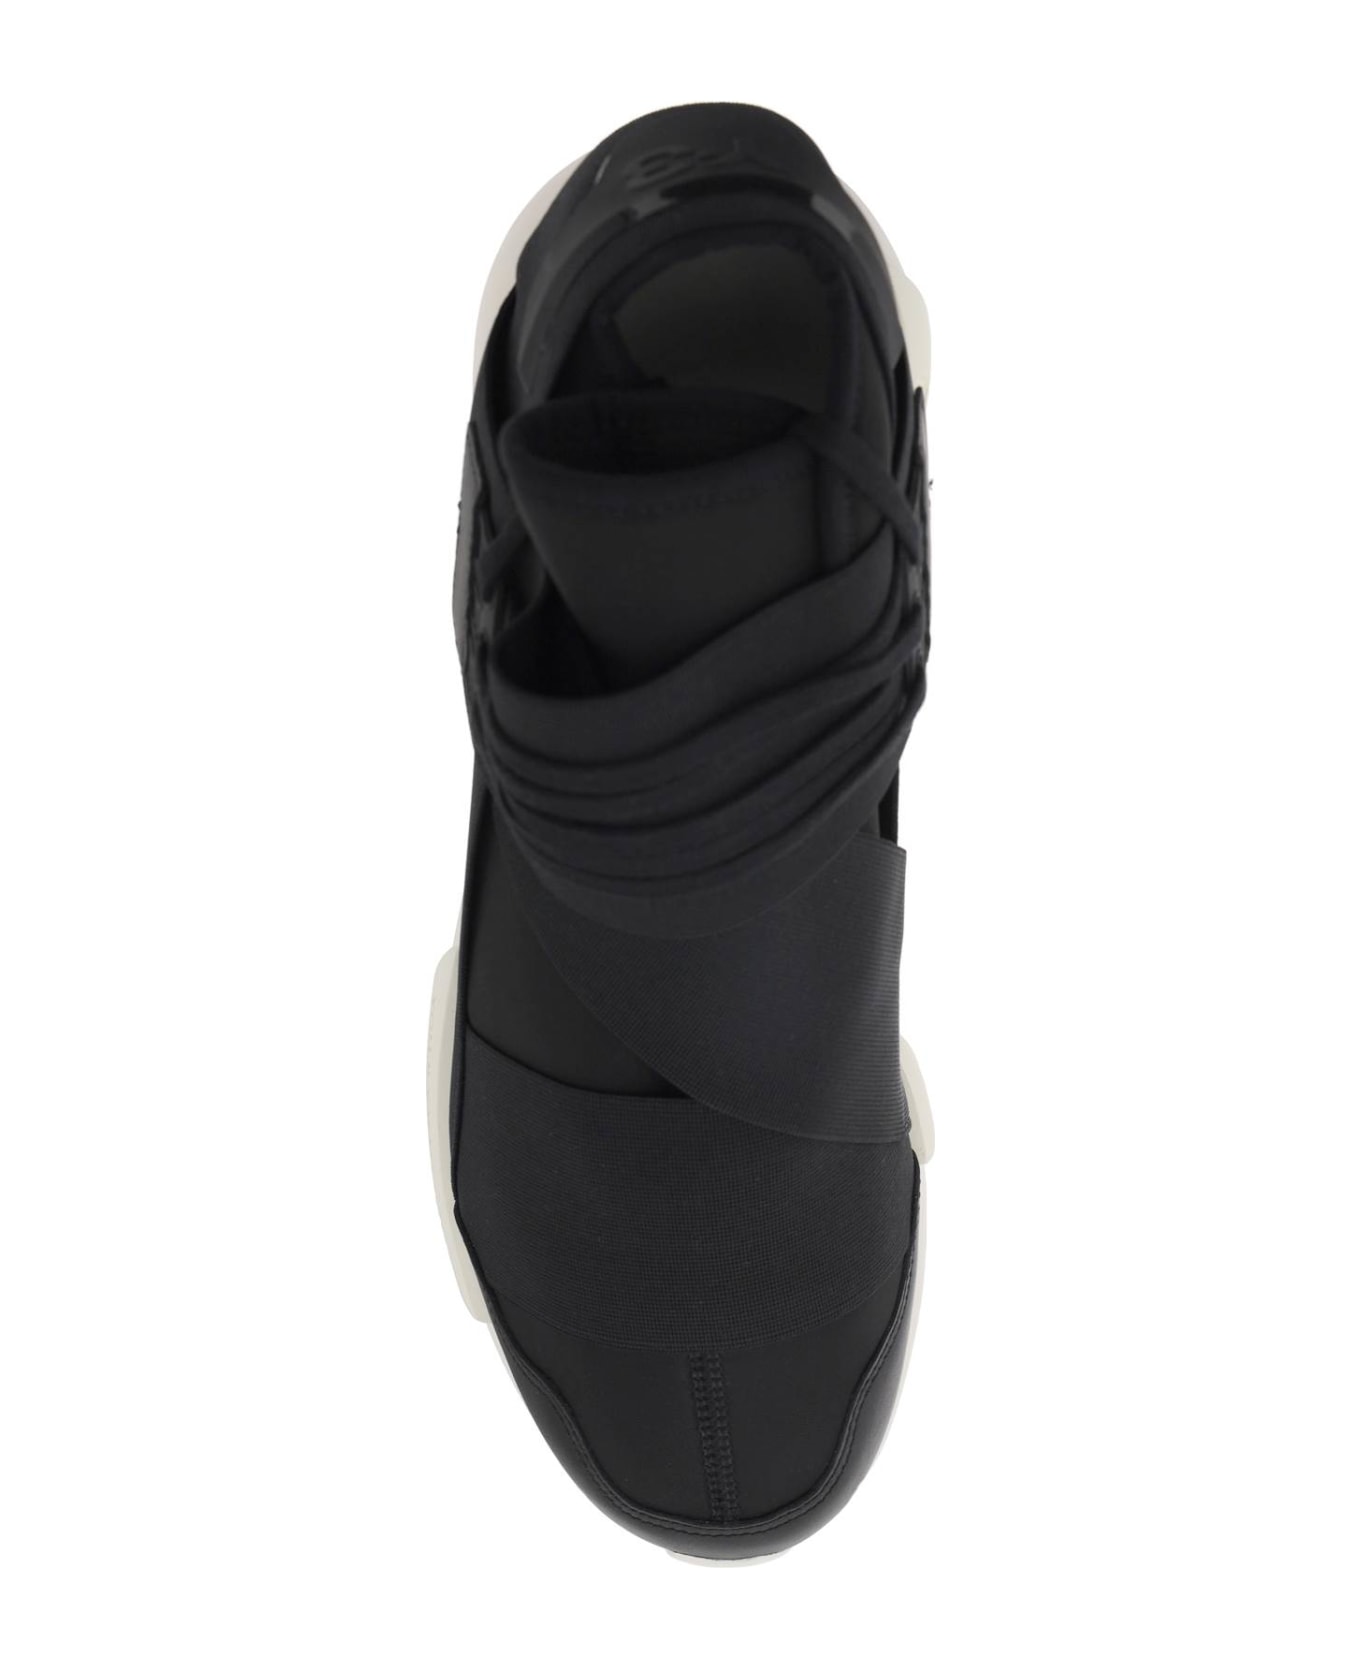 Y-3 Low Qasa Sneakers - BLACK BLACK OWHITE (Black)